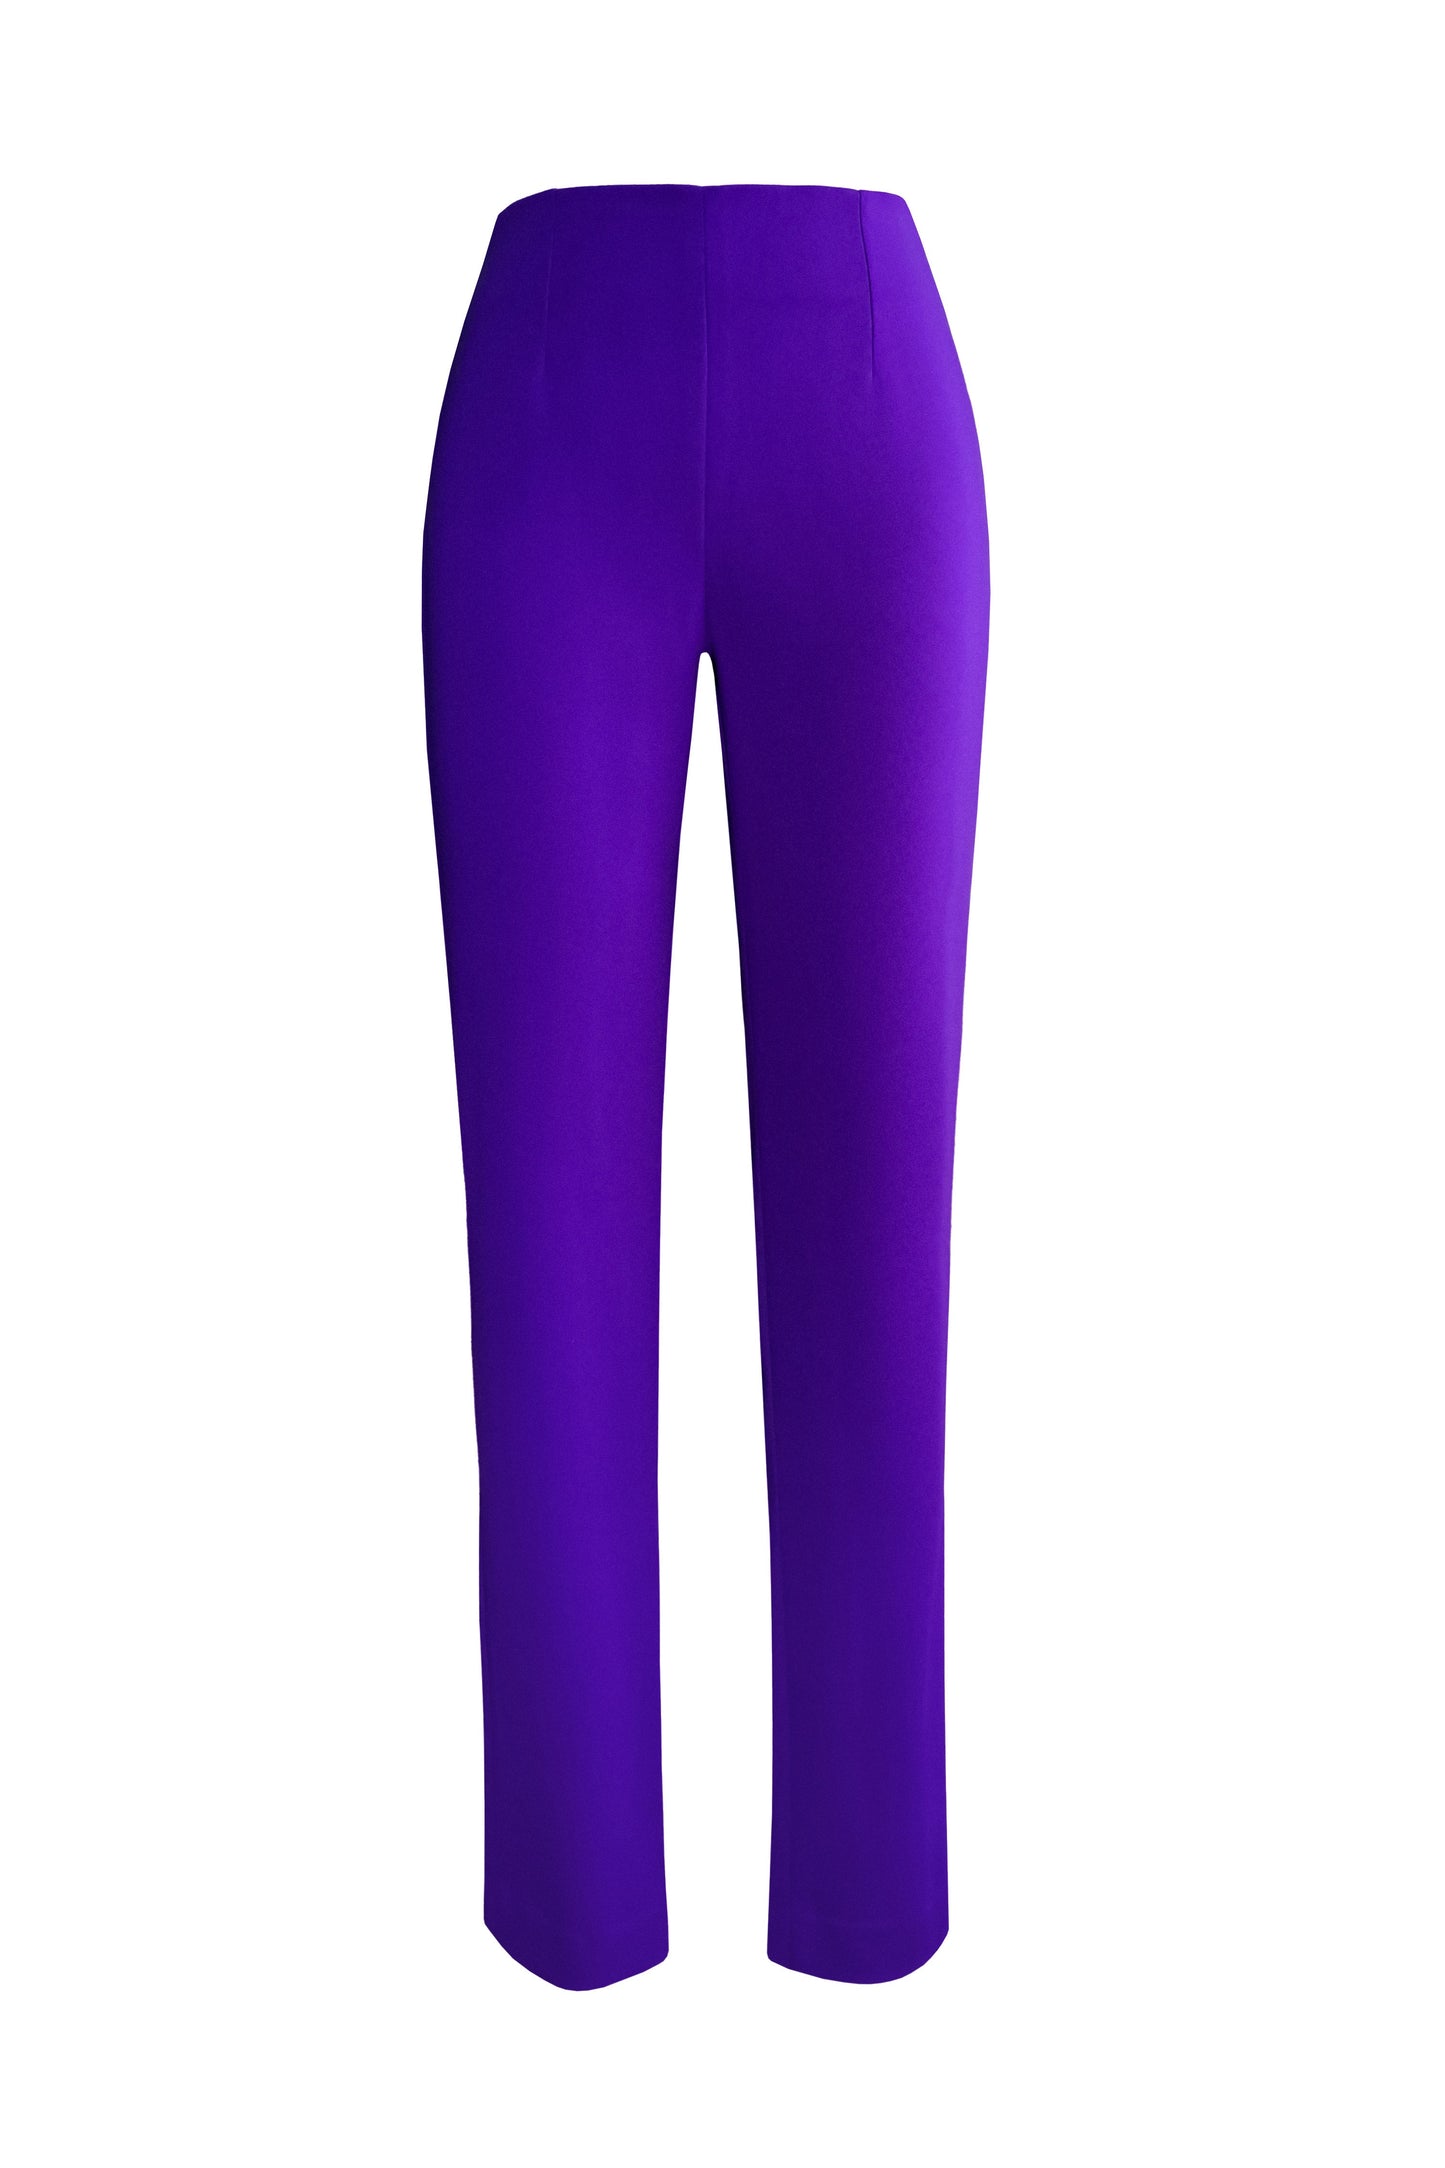 Purple straight-leg cigarette pants for women